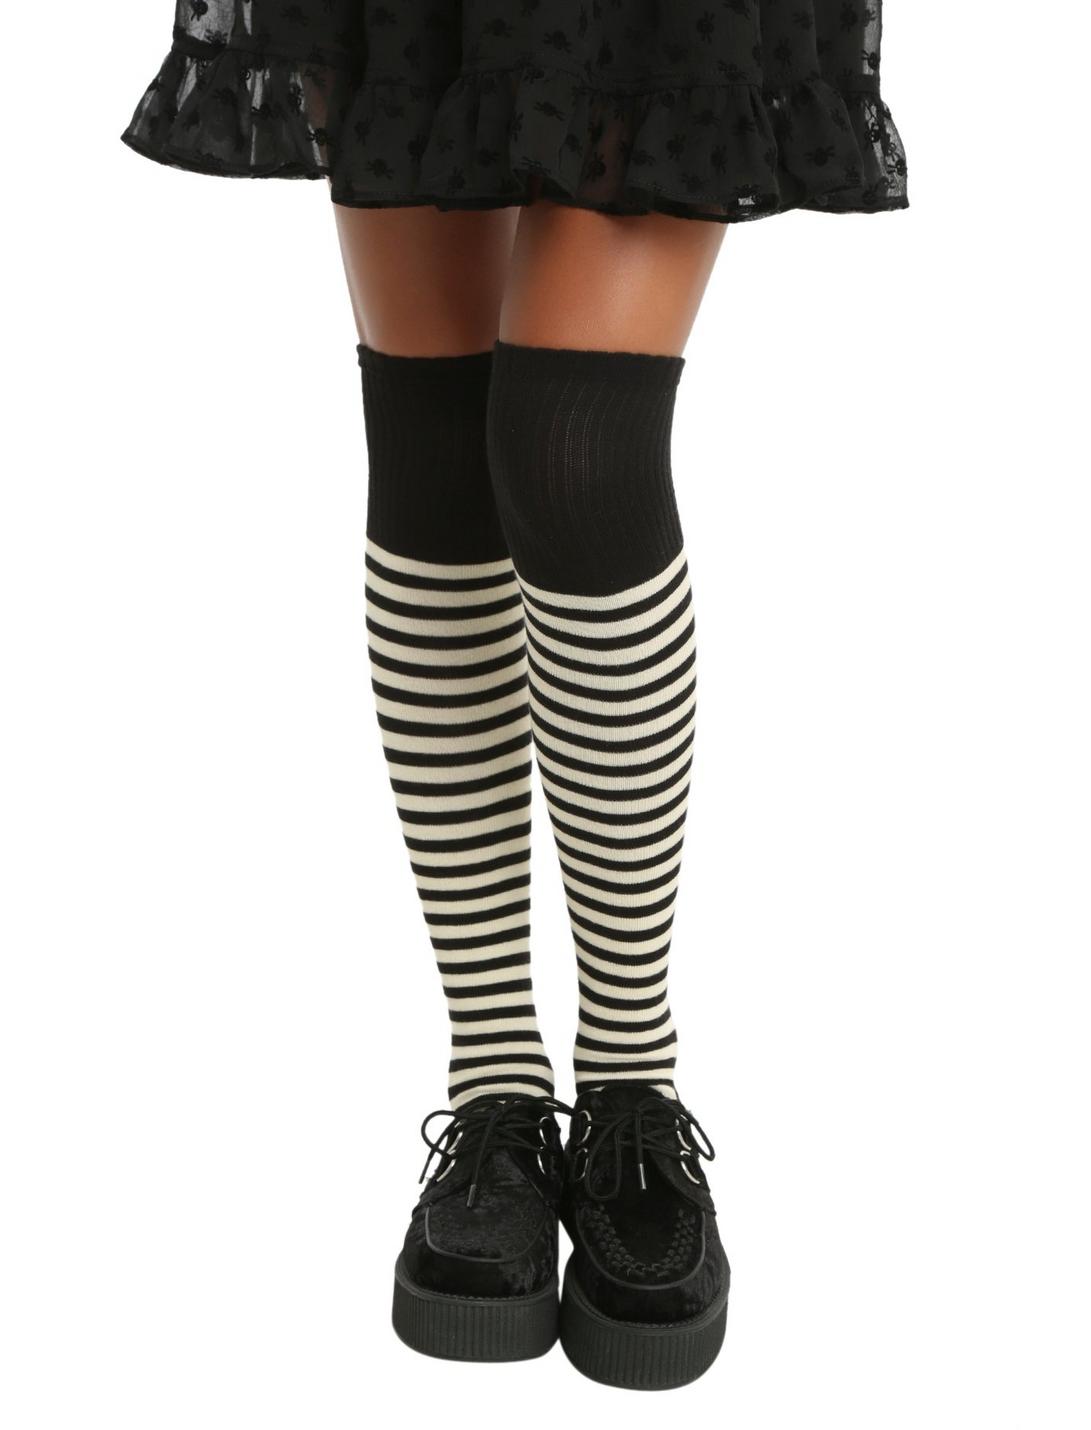 LOVEsick Black & Cream Striped Over-The-Knee Socks, , hi-res